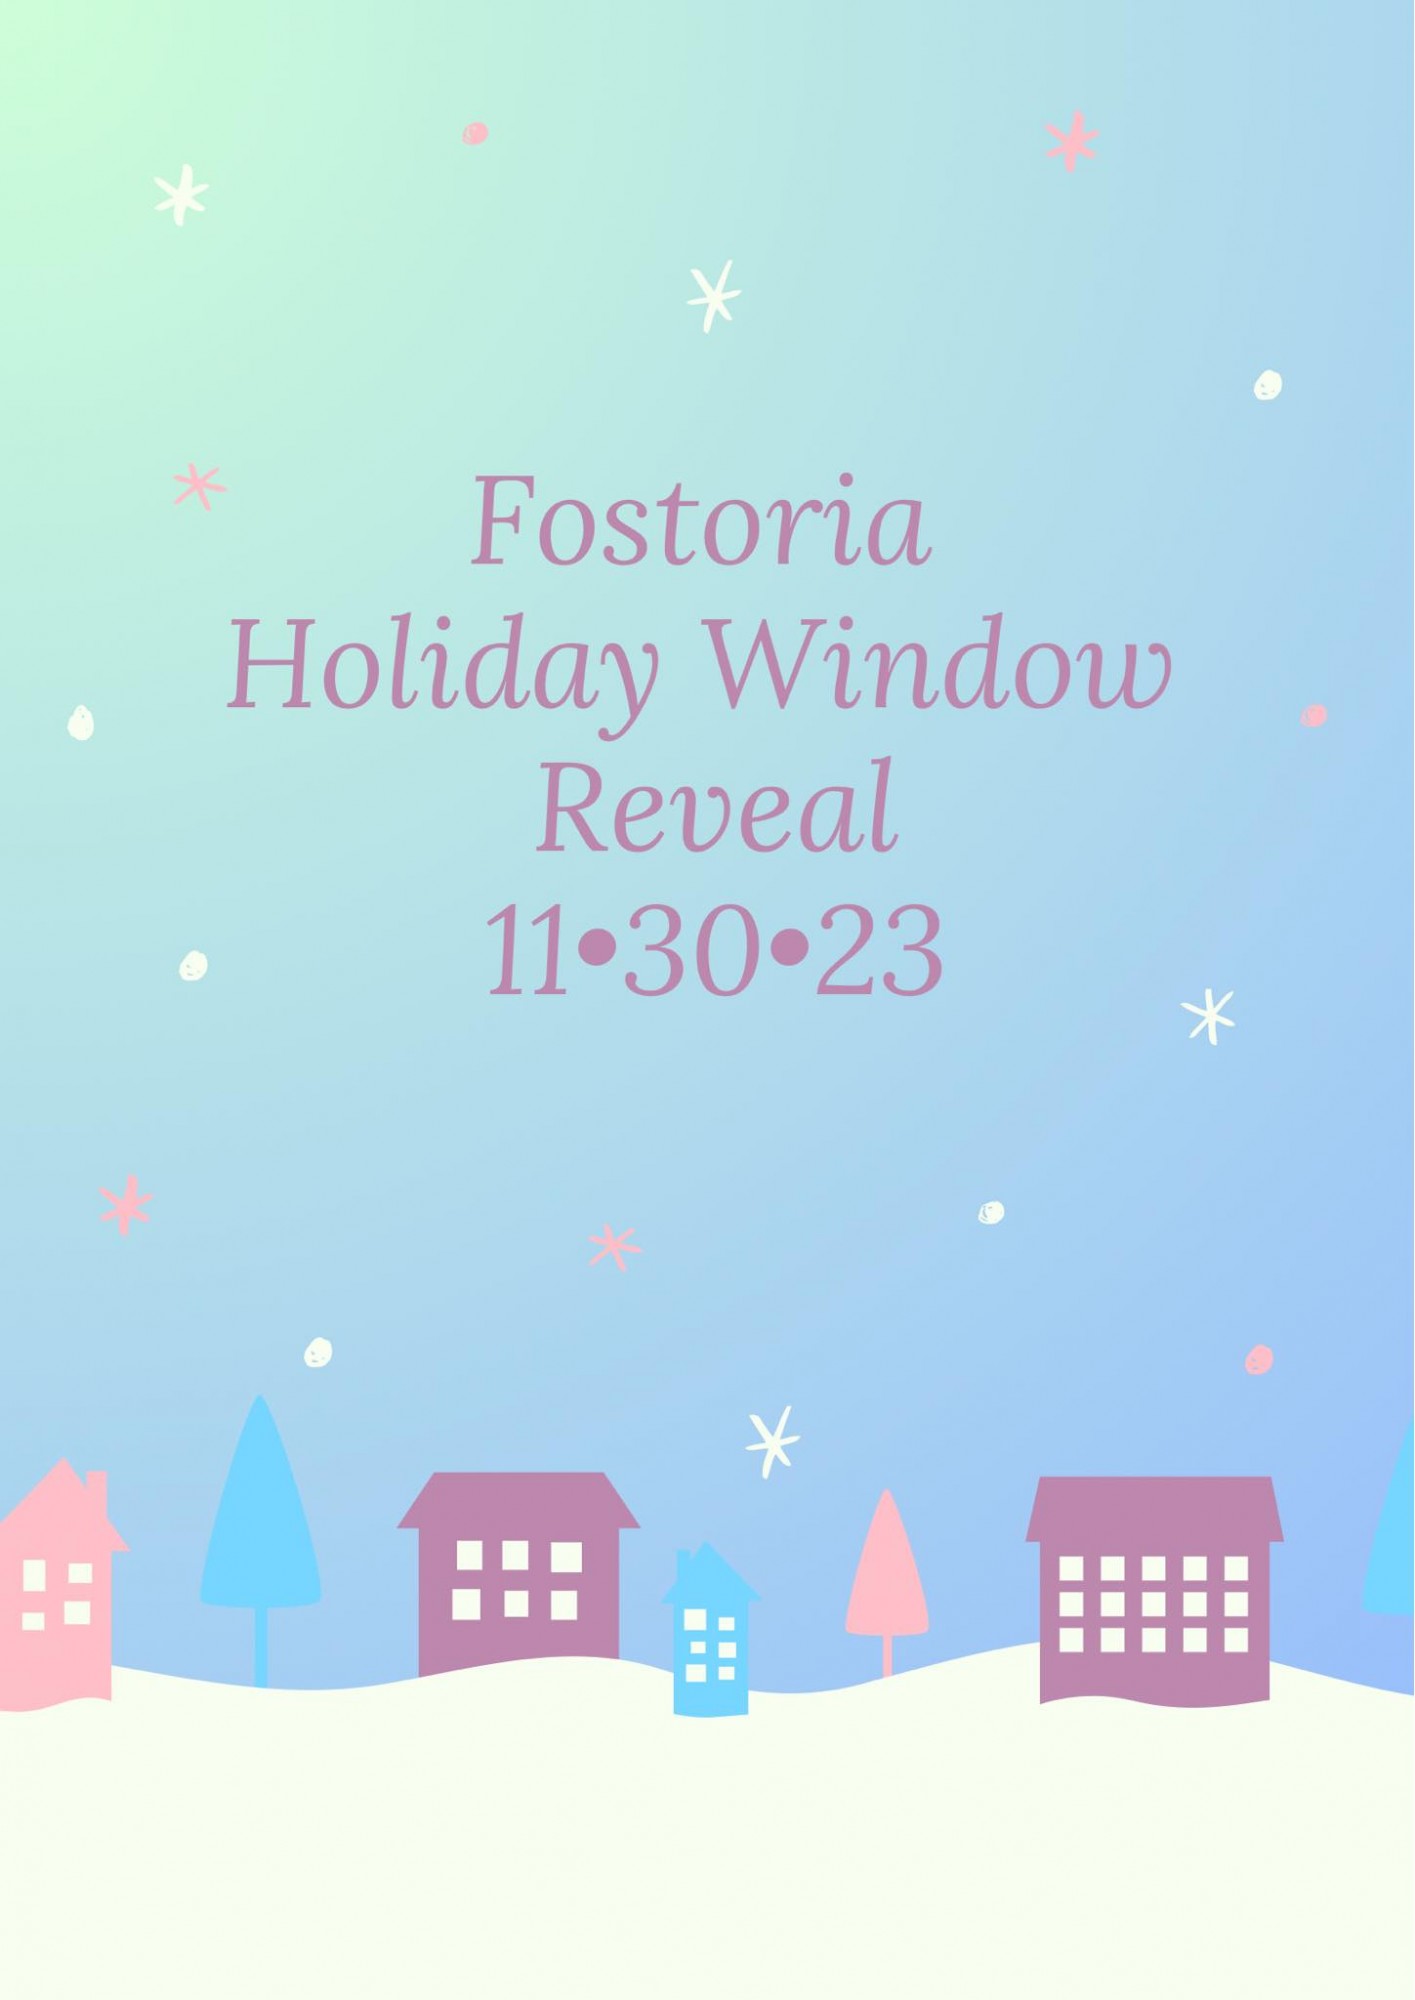 Fostoria Holiday Window Reveal